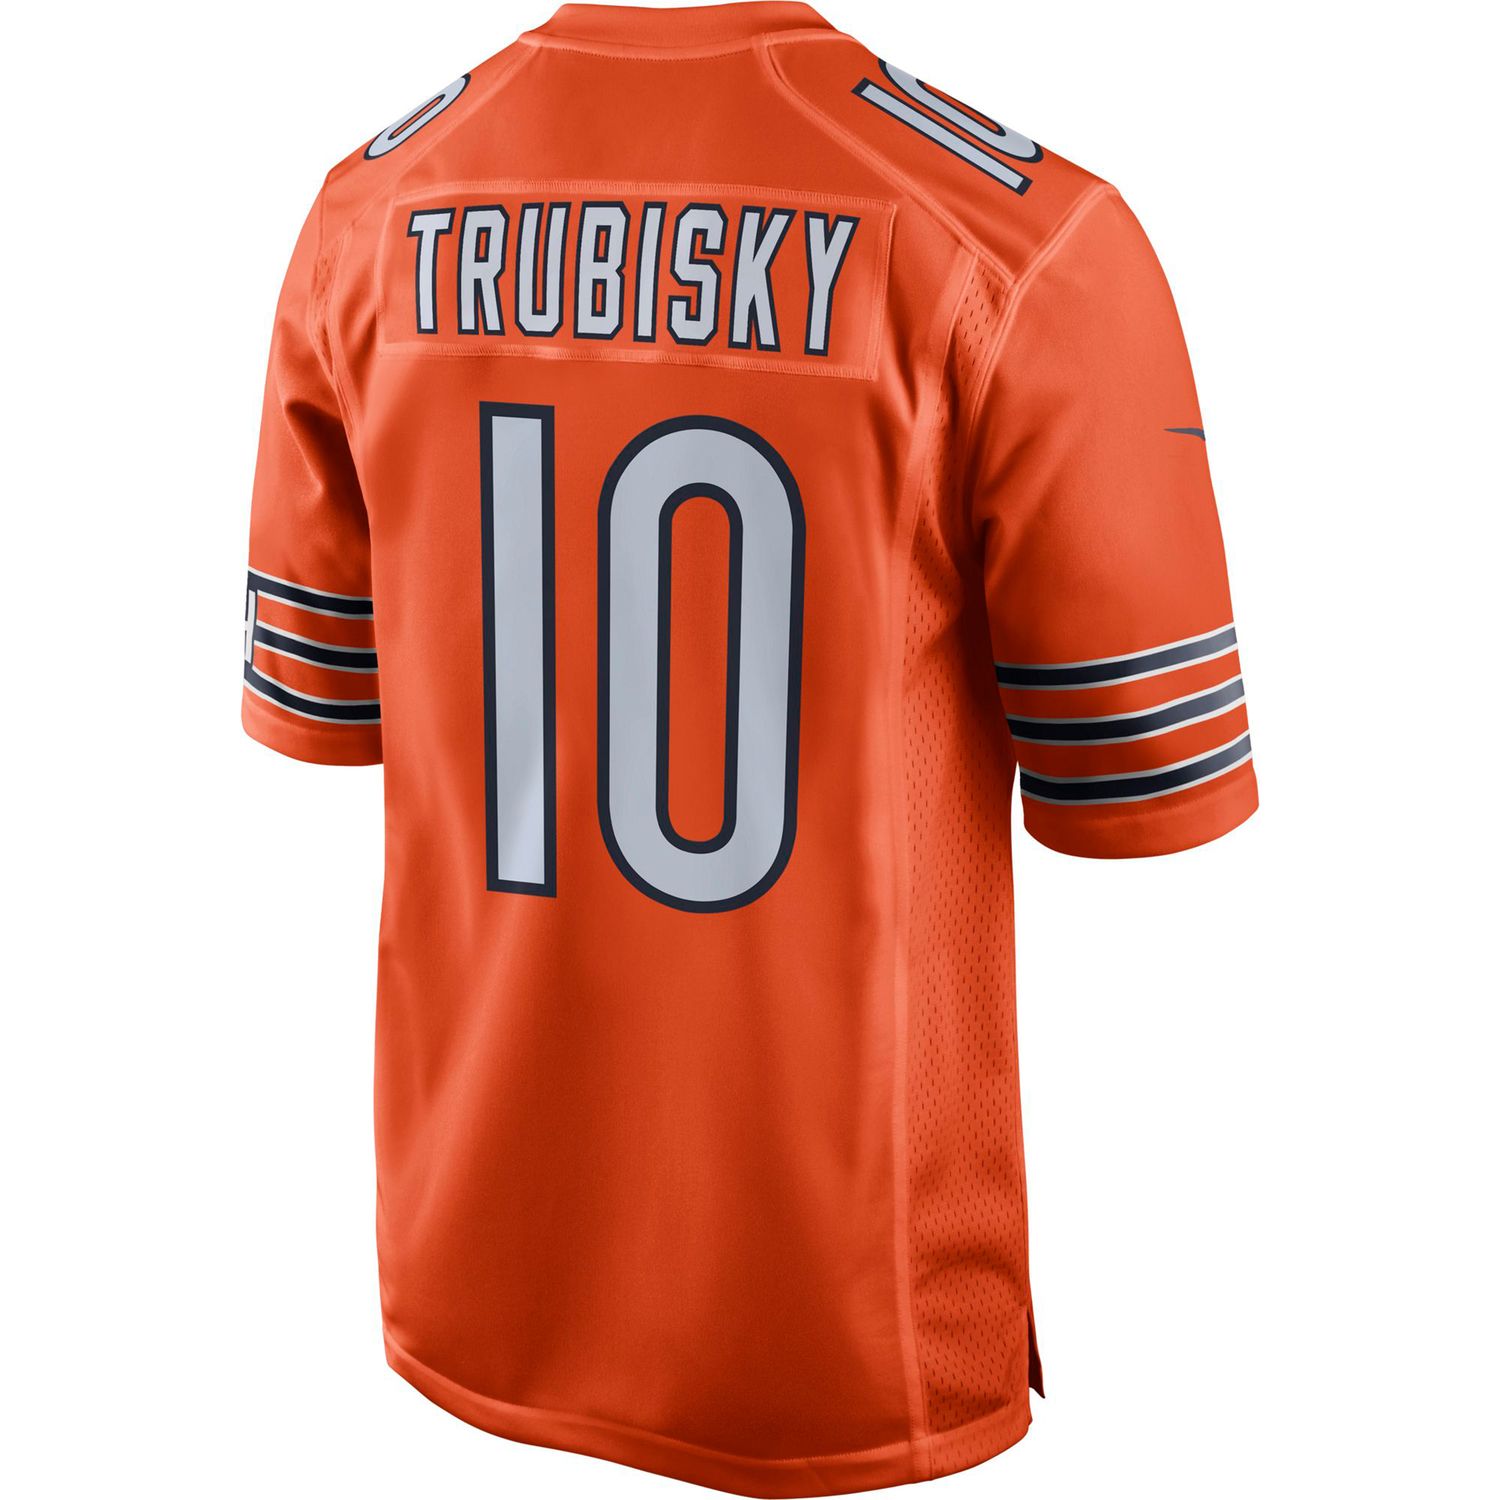 trubisky jersey number